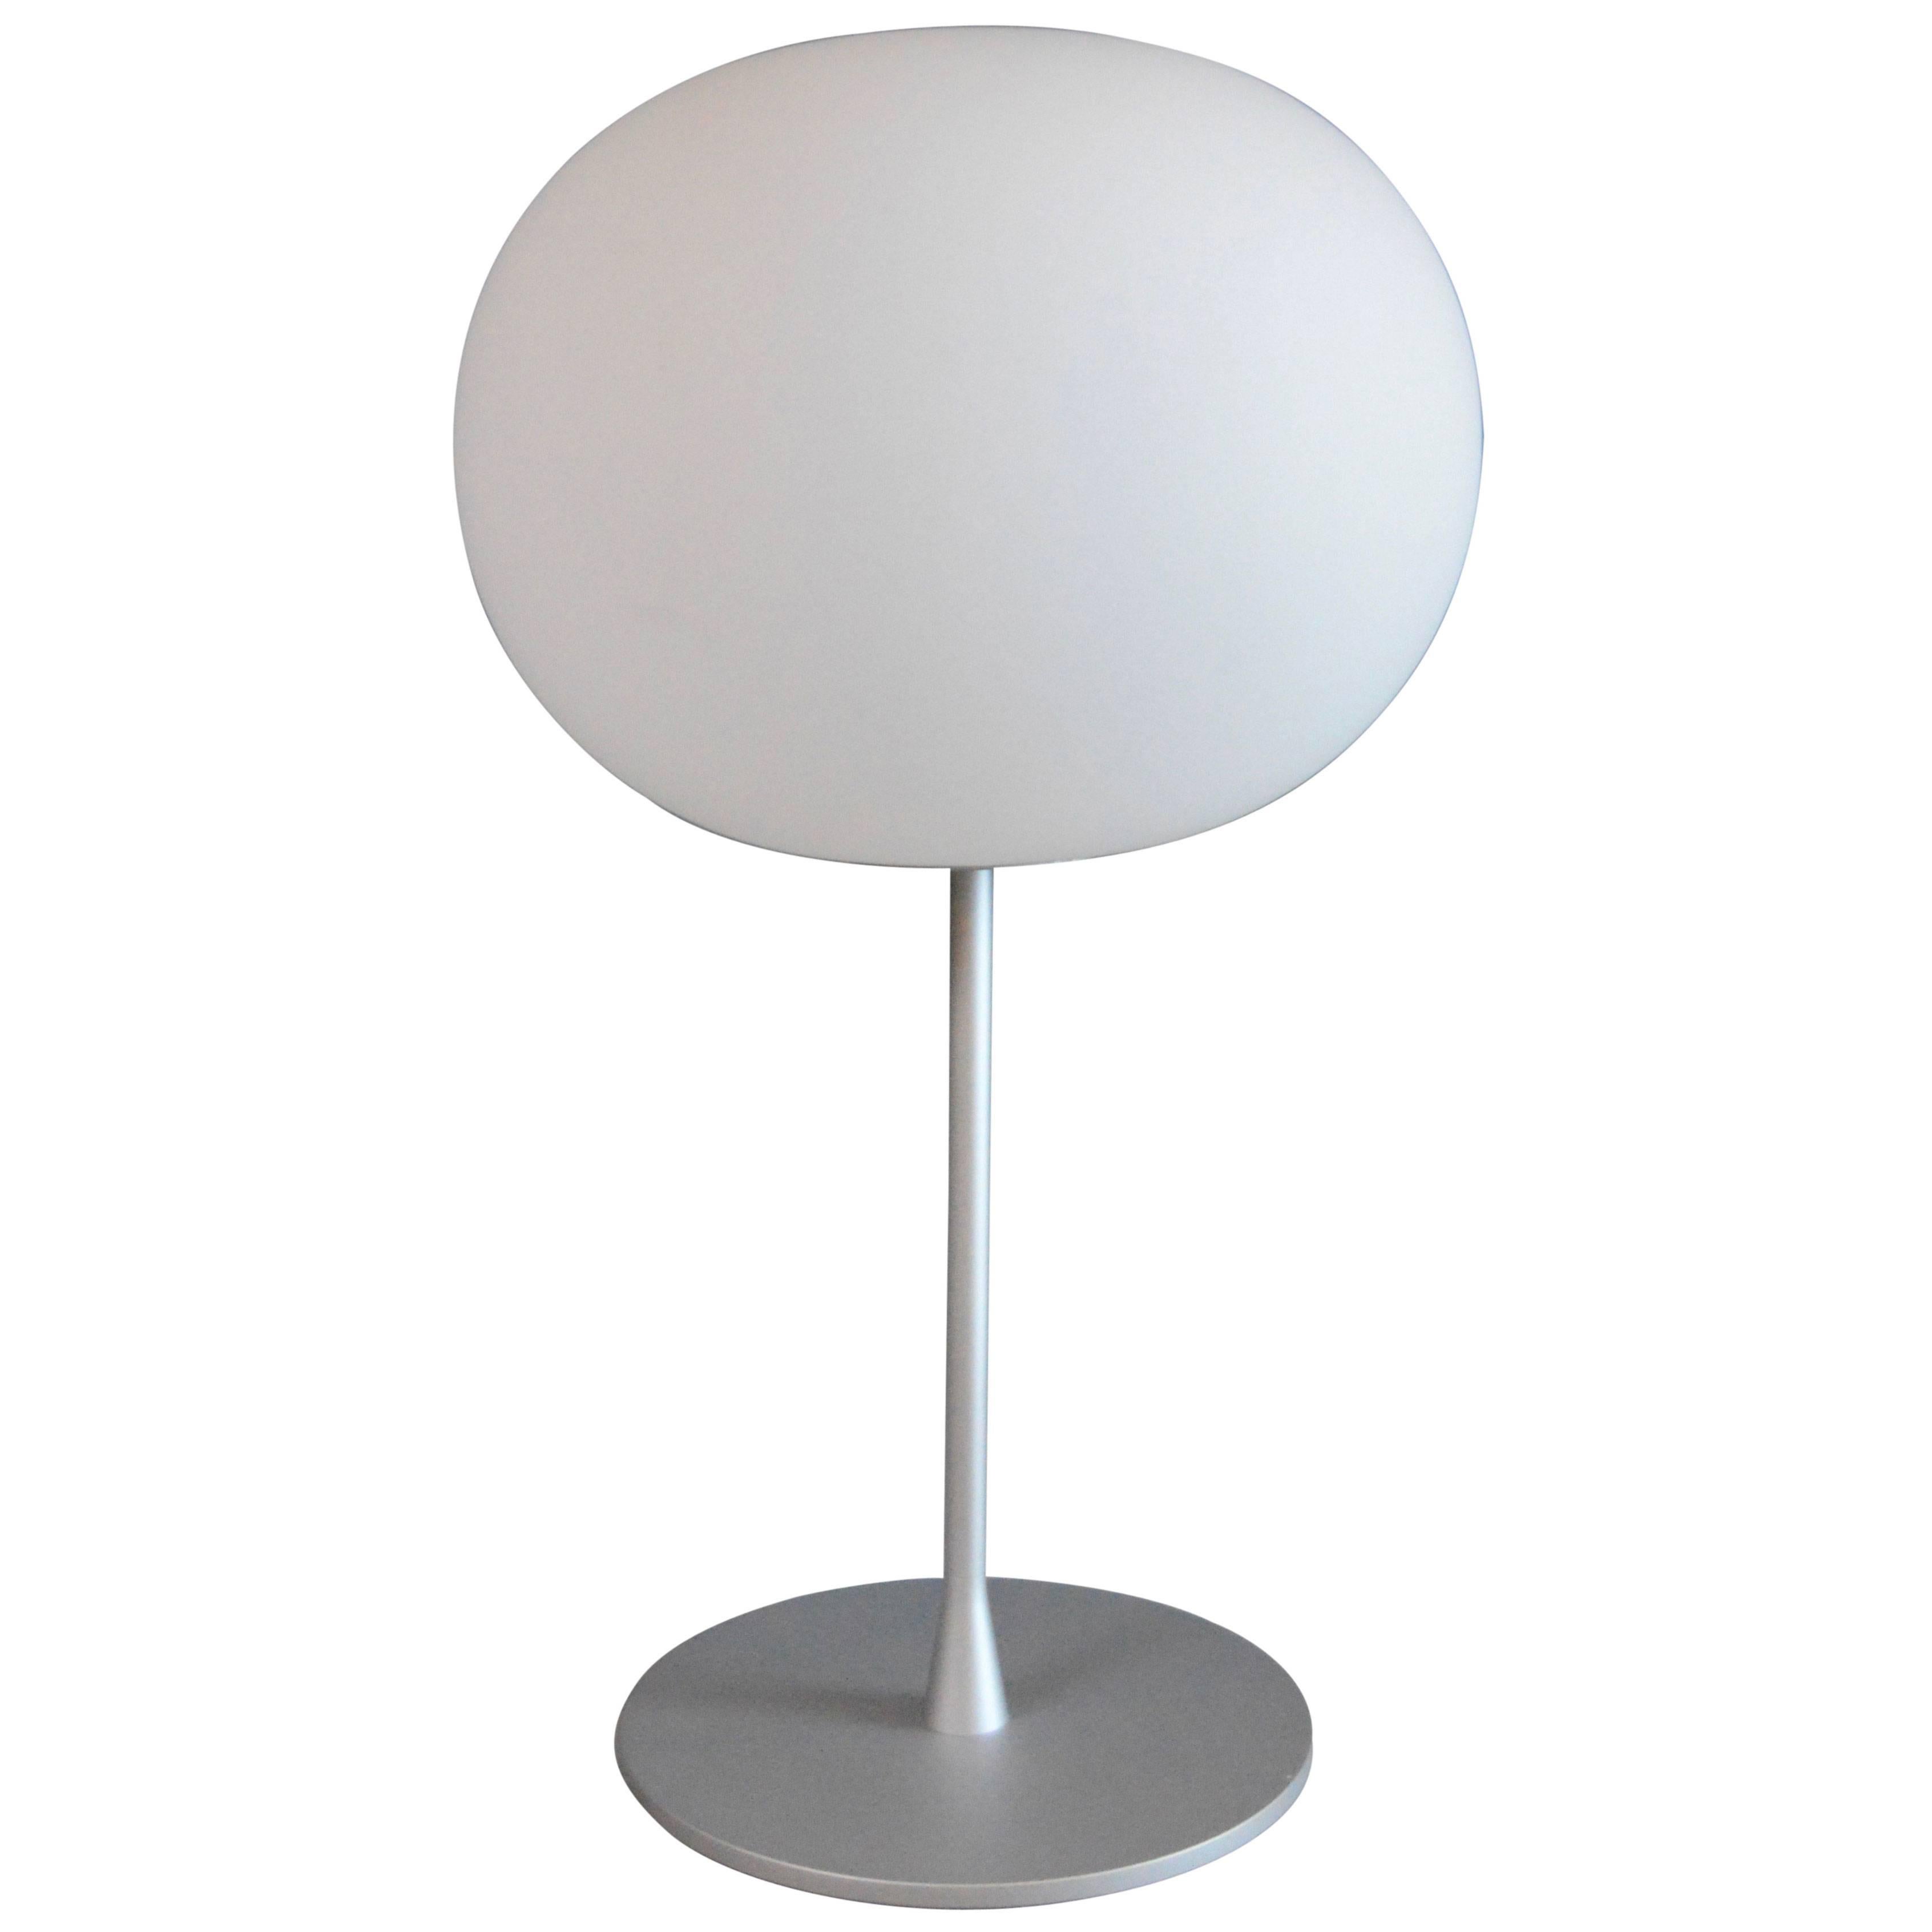 Glo-Ball Table Lamp by Jasper Morrison for Flos